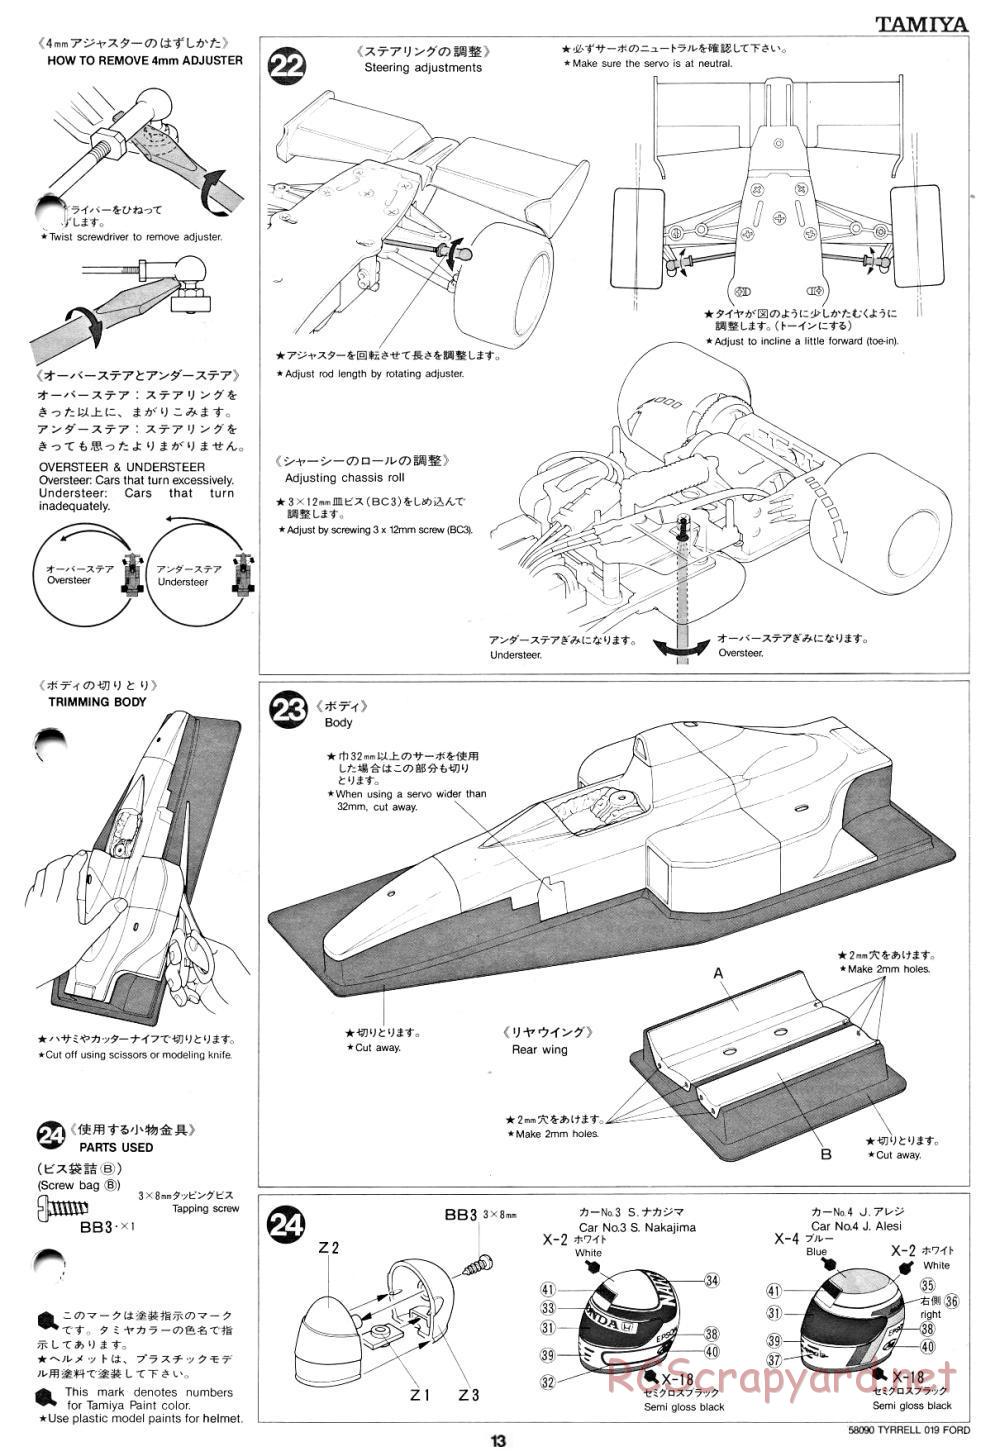 Tamiya - Tyrrell 019 Ford - 58090 - Manual - Page 13